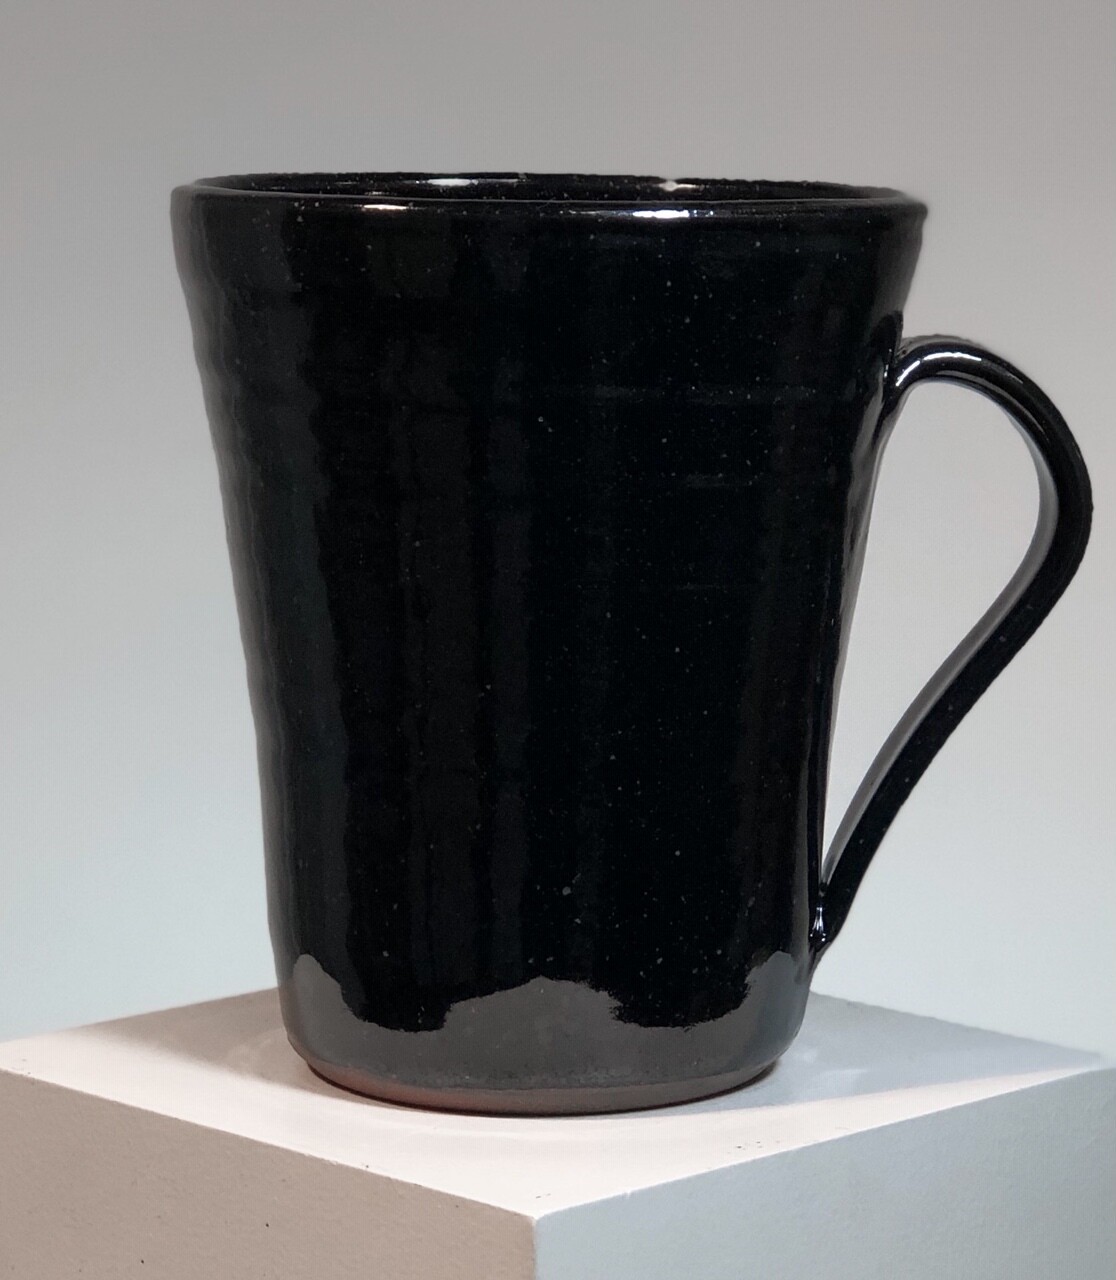 Black Pottery Mug